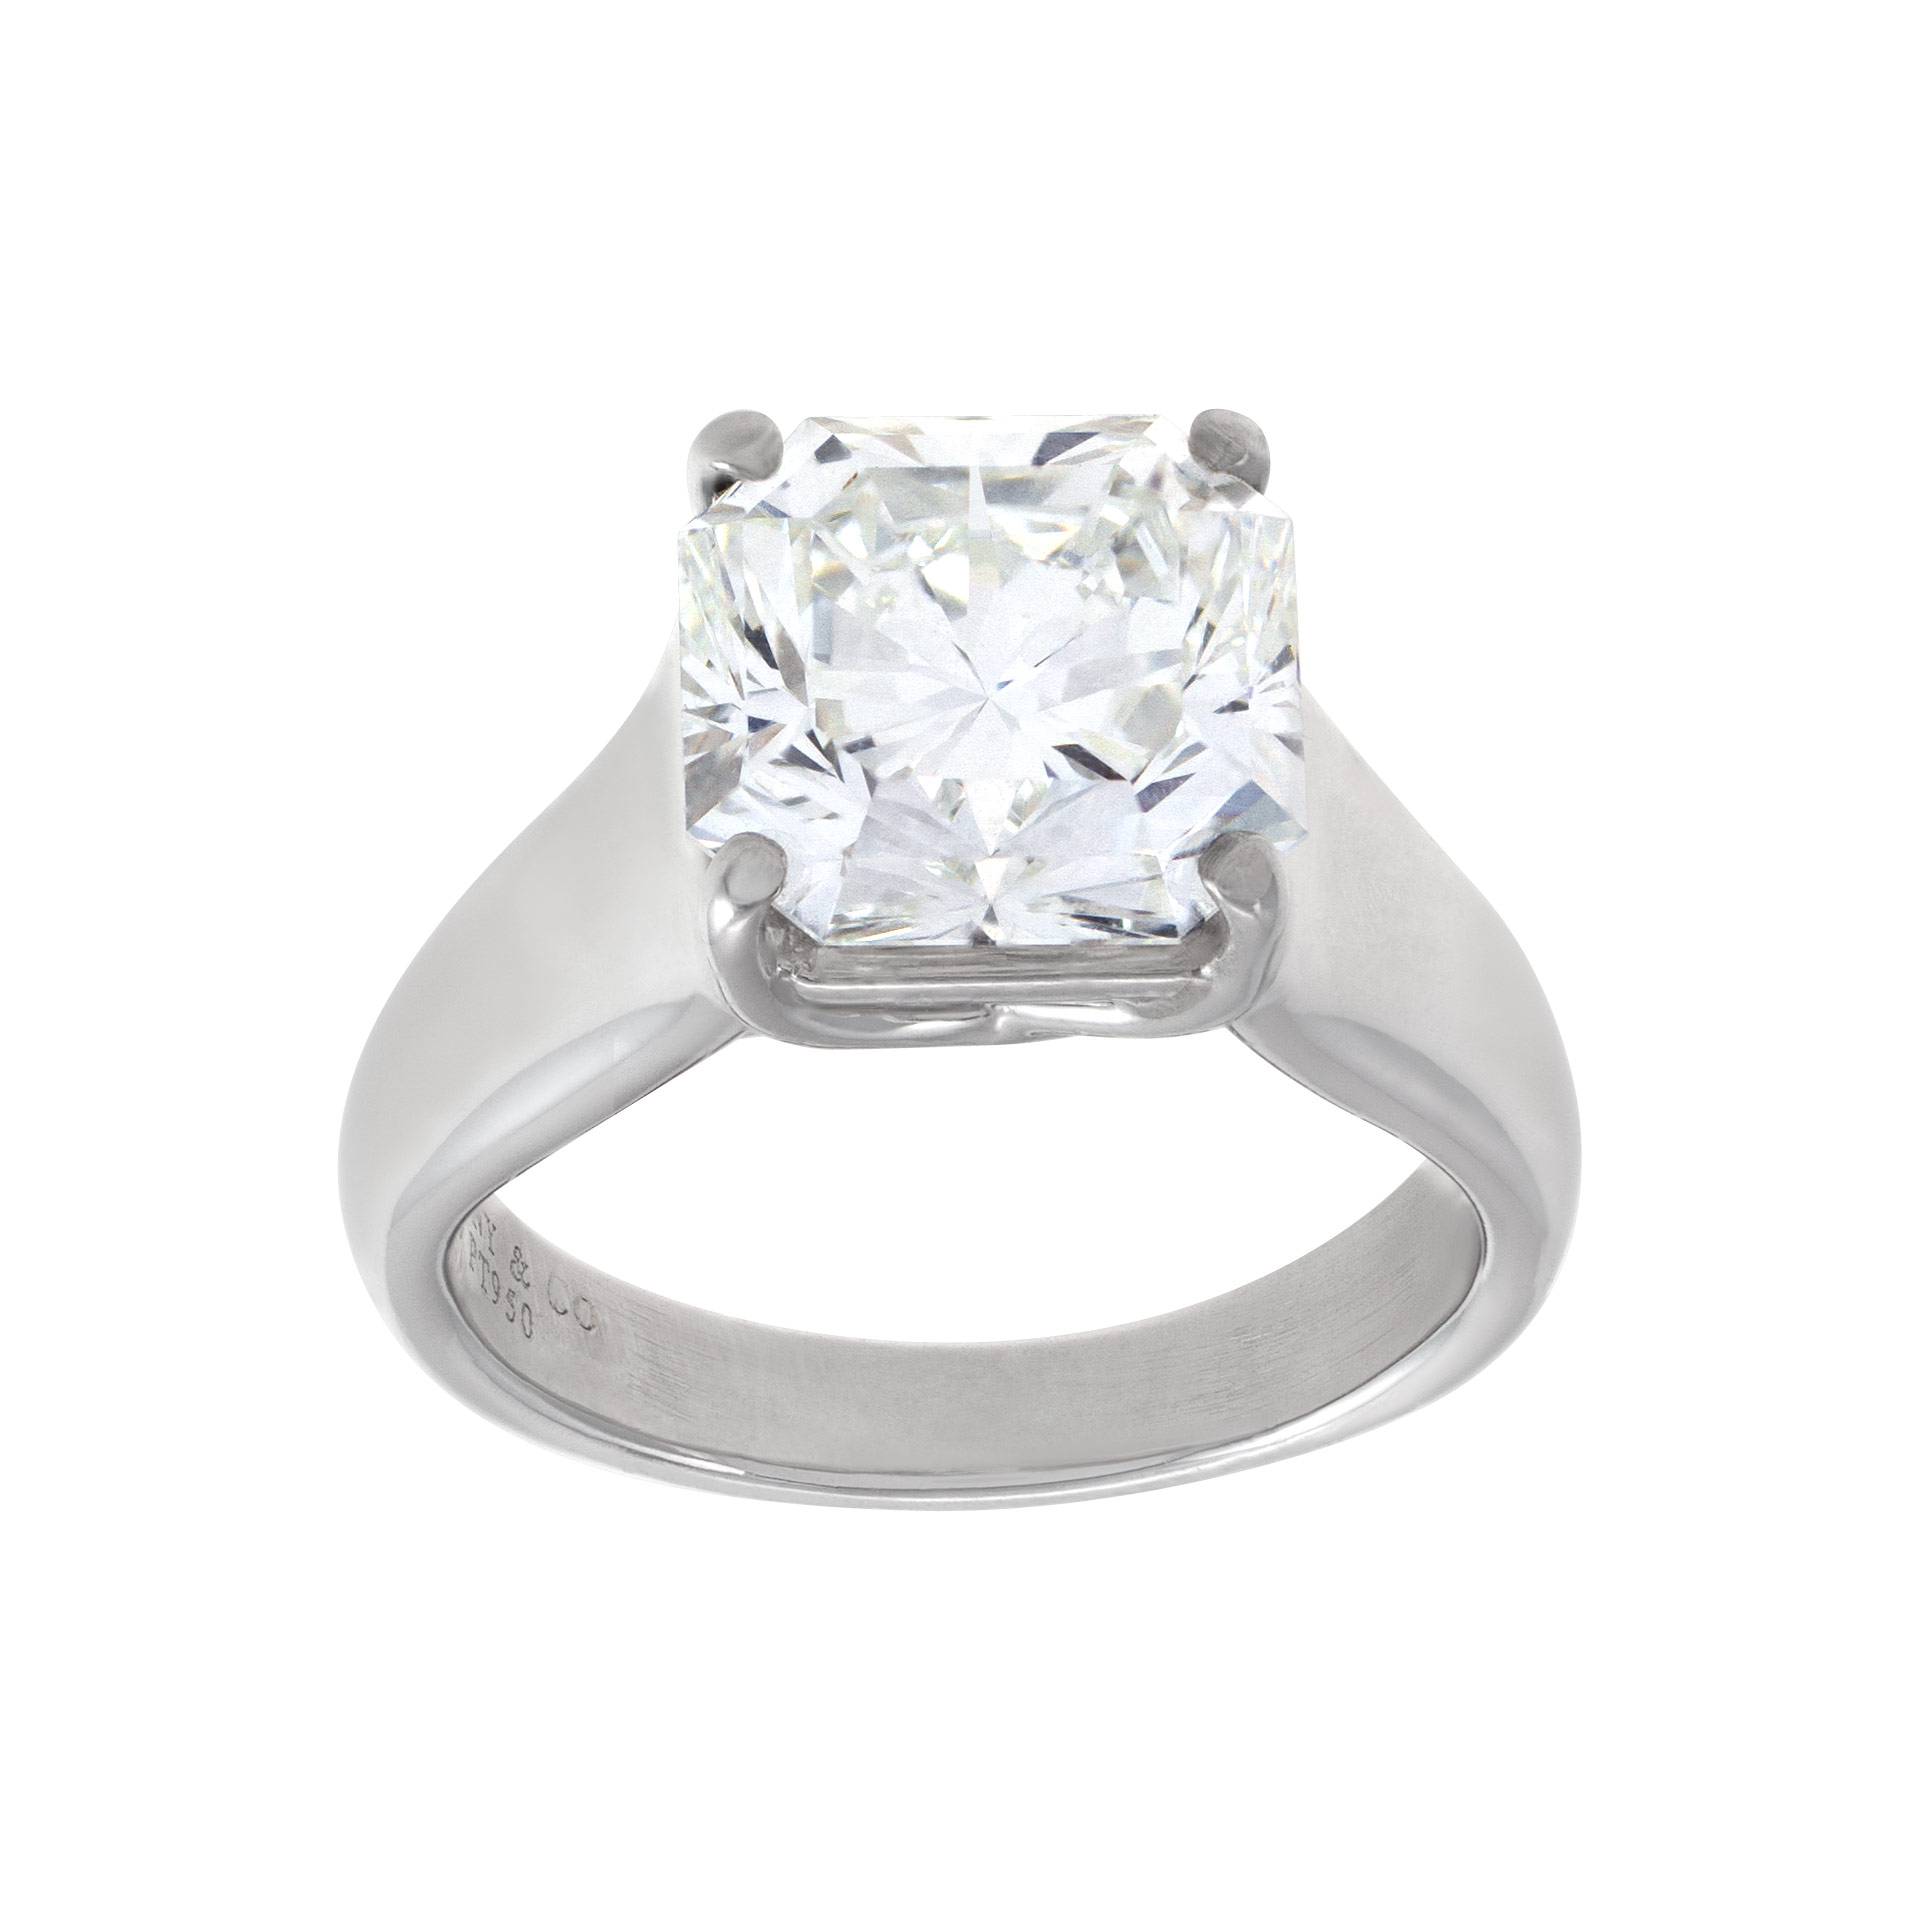 Tiffany & Co. "Lucida" 4.30 carat F color VS clarity diamond ring in platinum